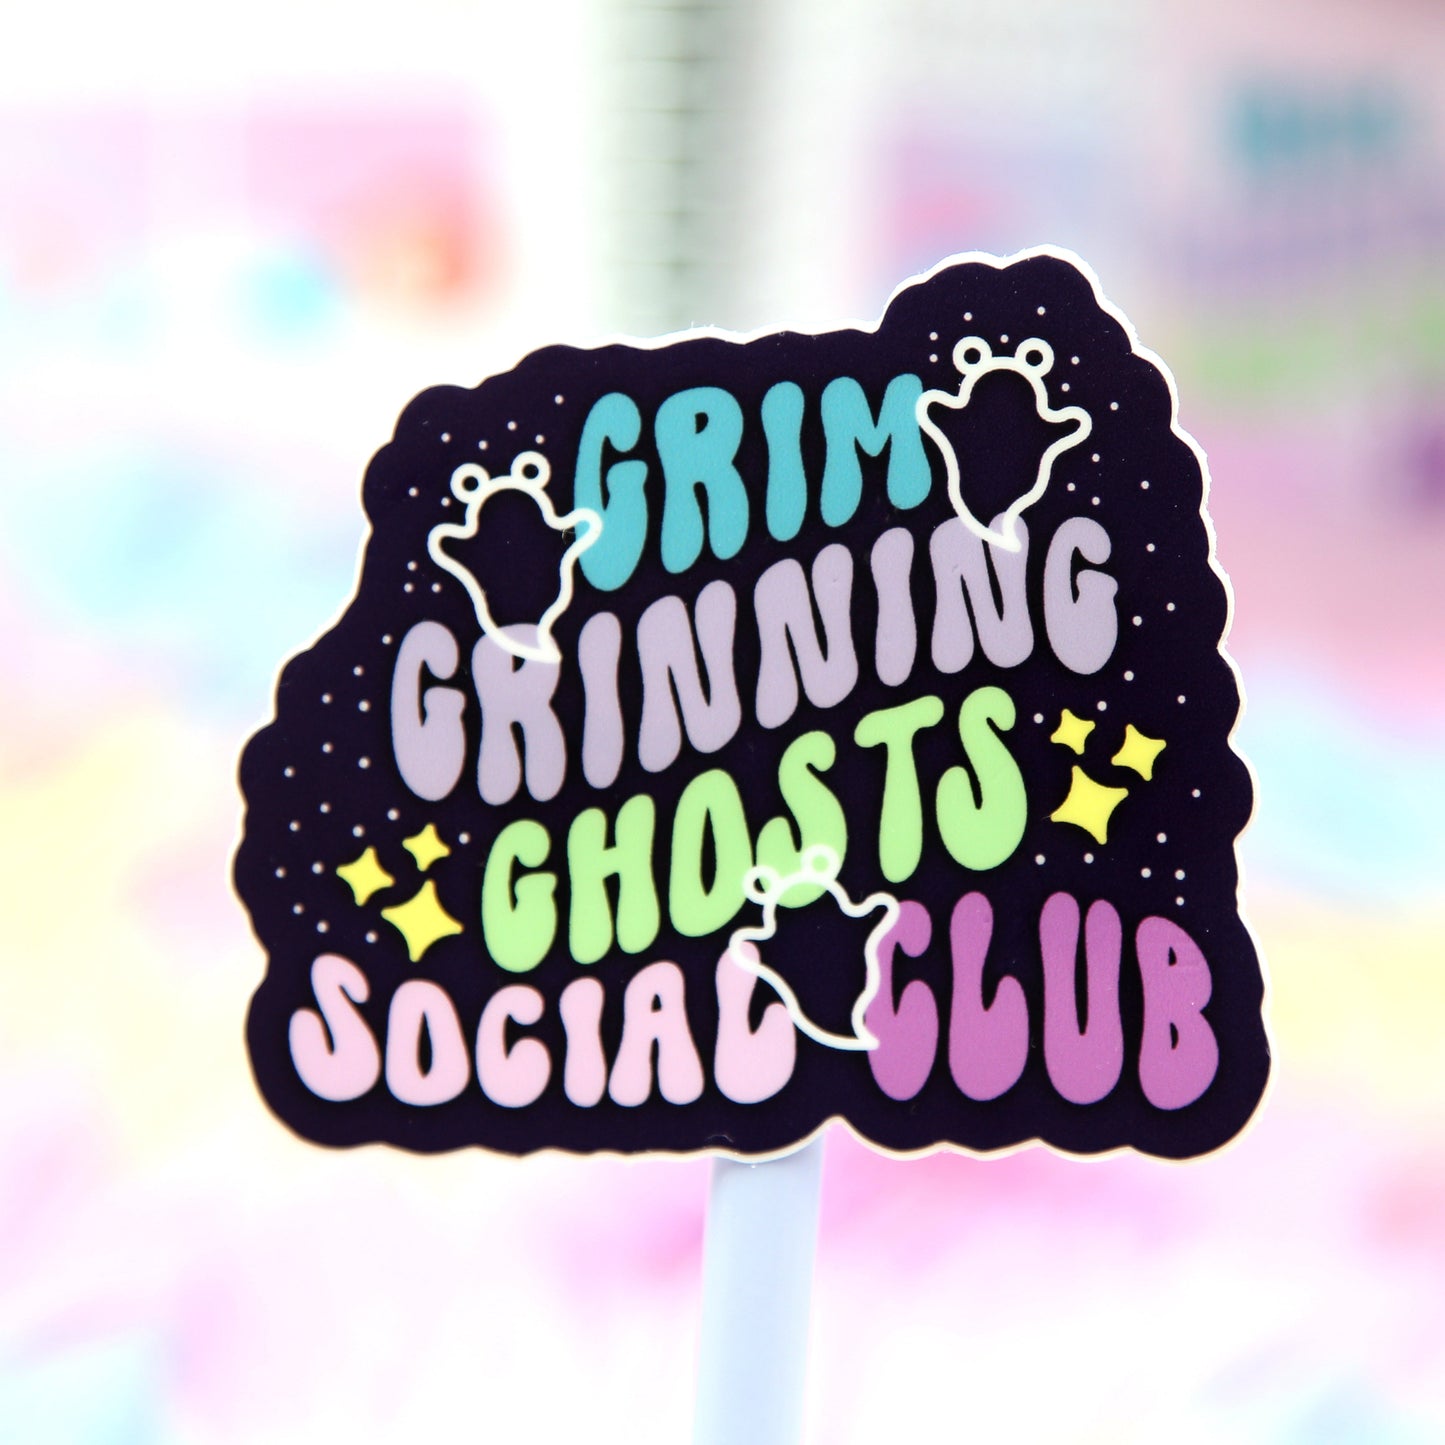 Grim Grinning Ghosts Social Club Vinyl Sticker